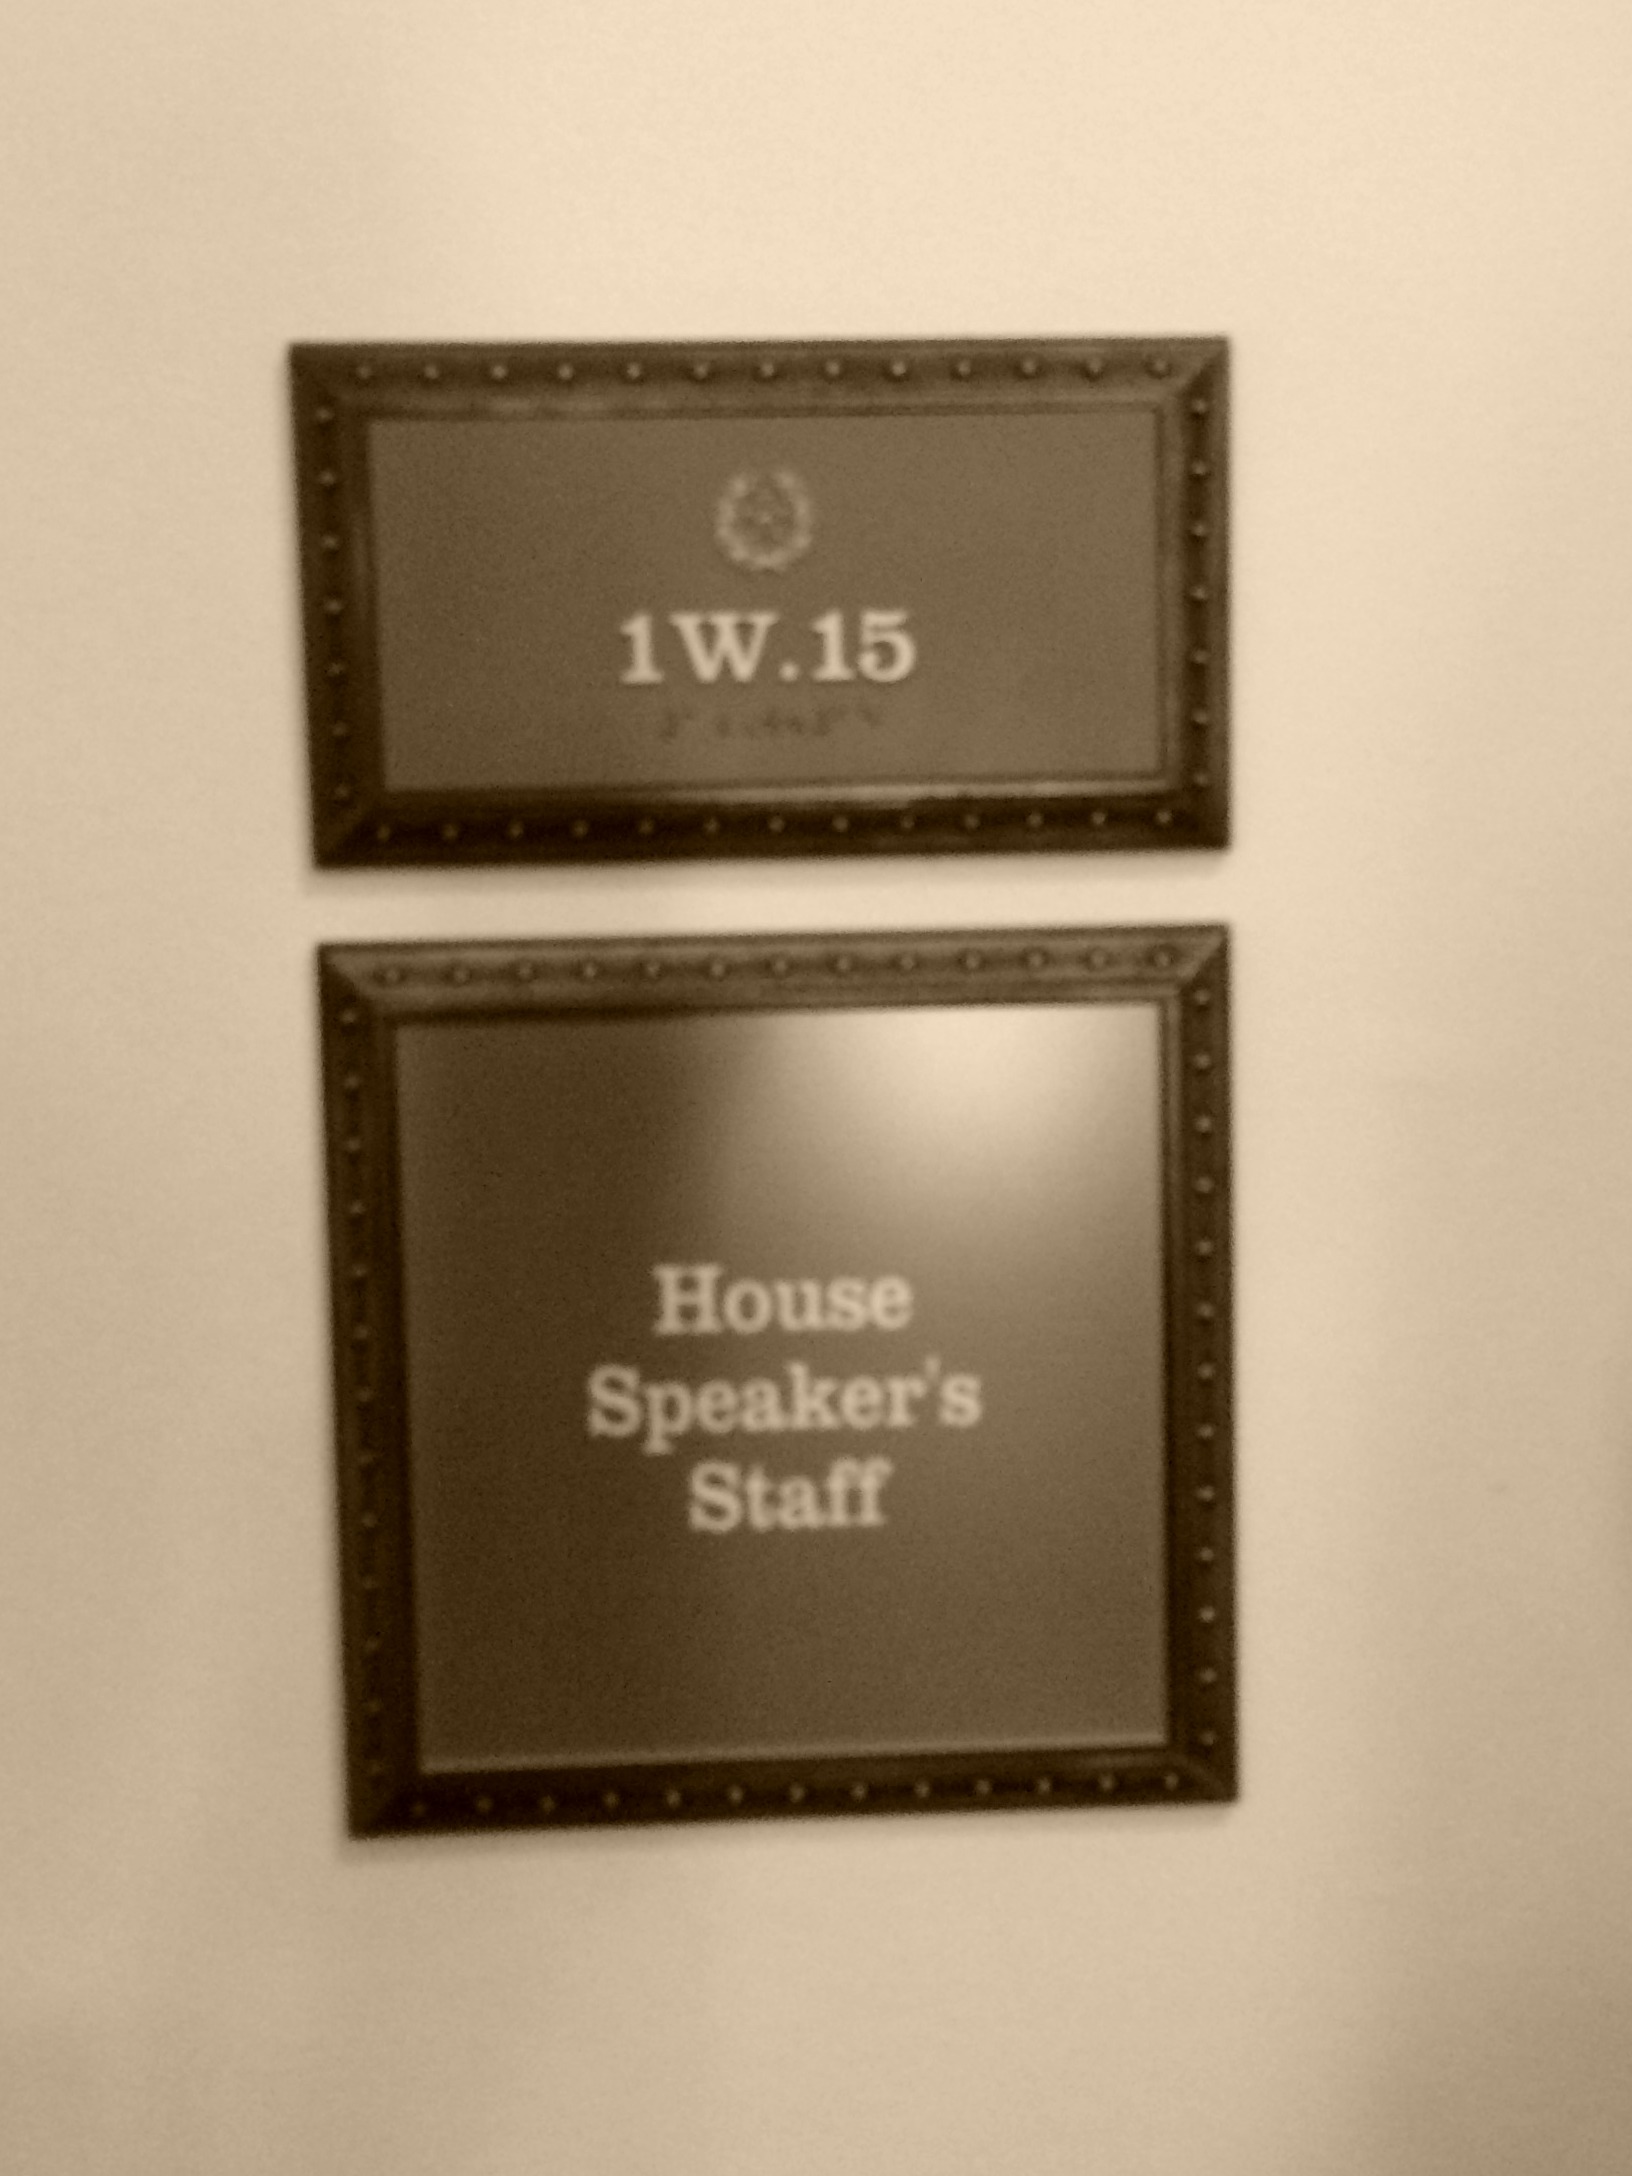 House Speaker's Staff 1W.15 | San Antonio Charter Moms